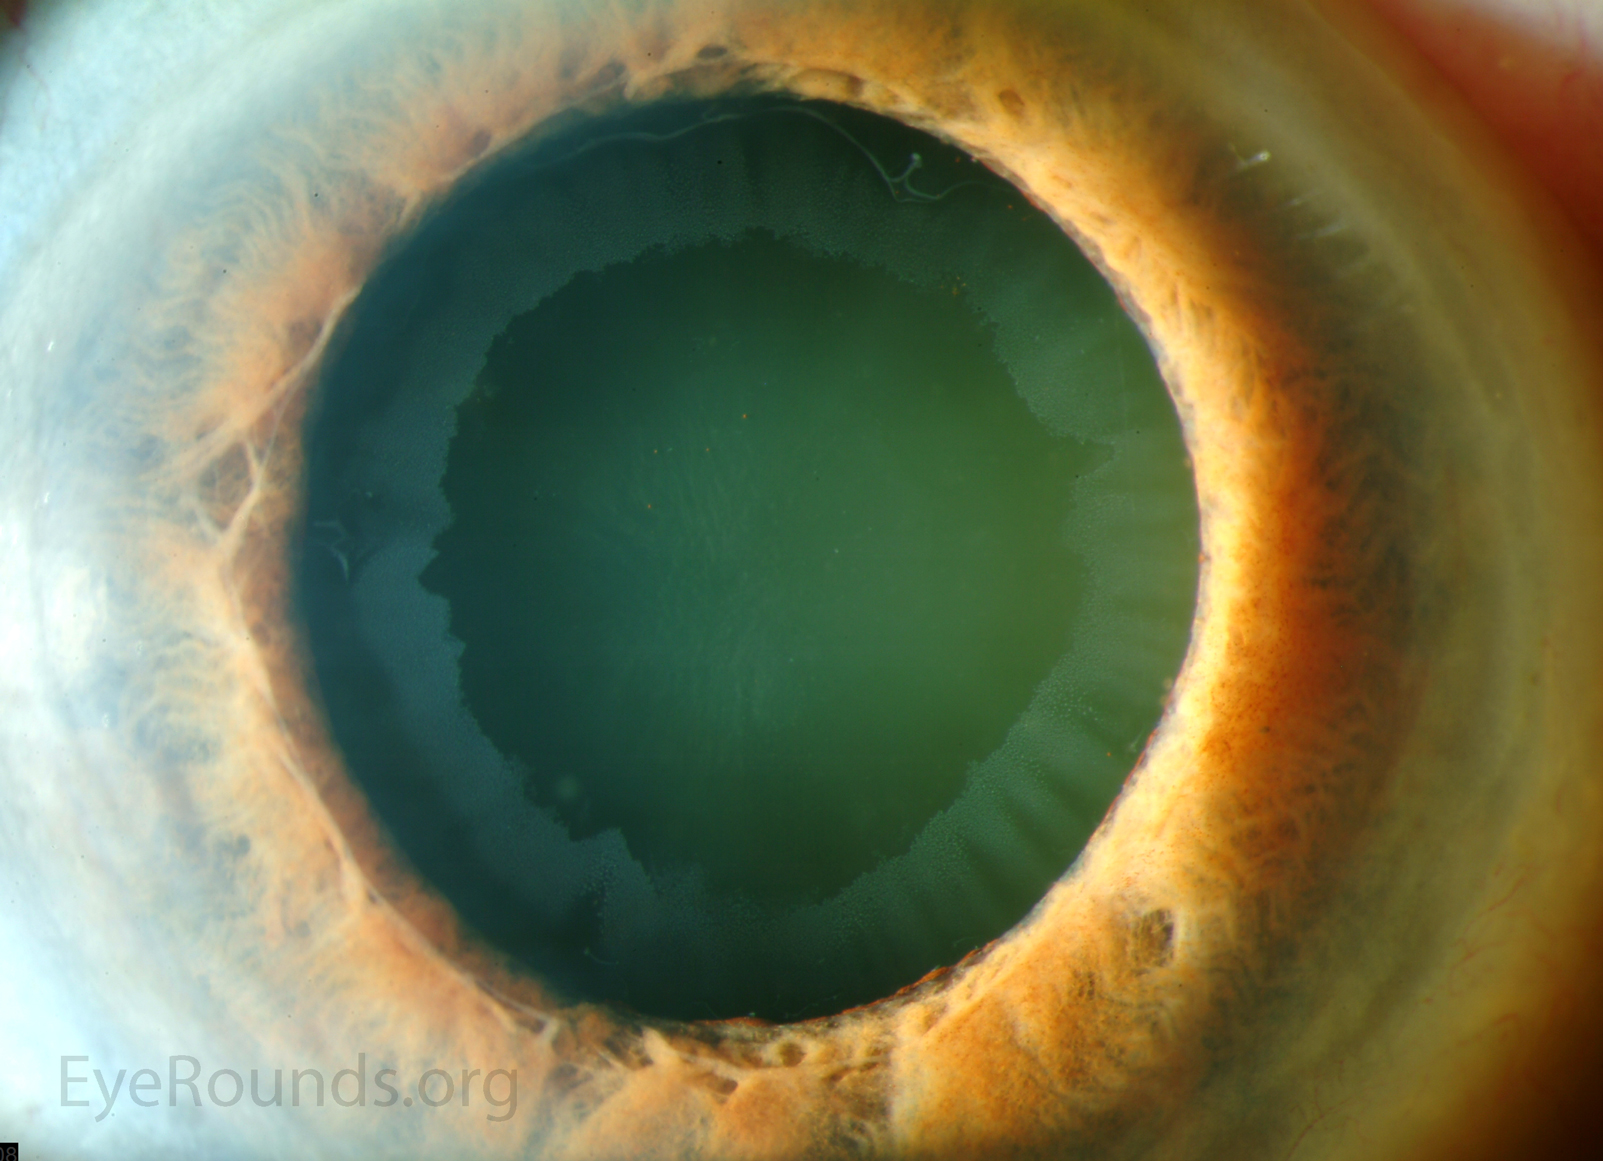 Exfoliative material on the pupillary margin and anterior lens capsule